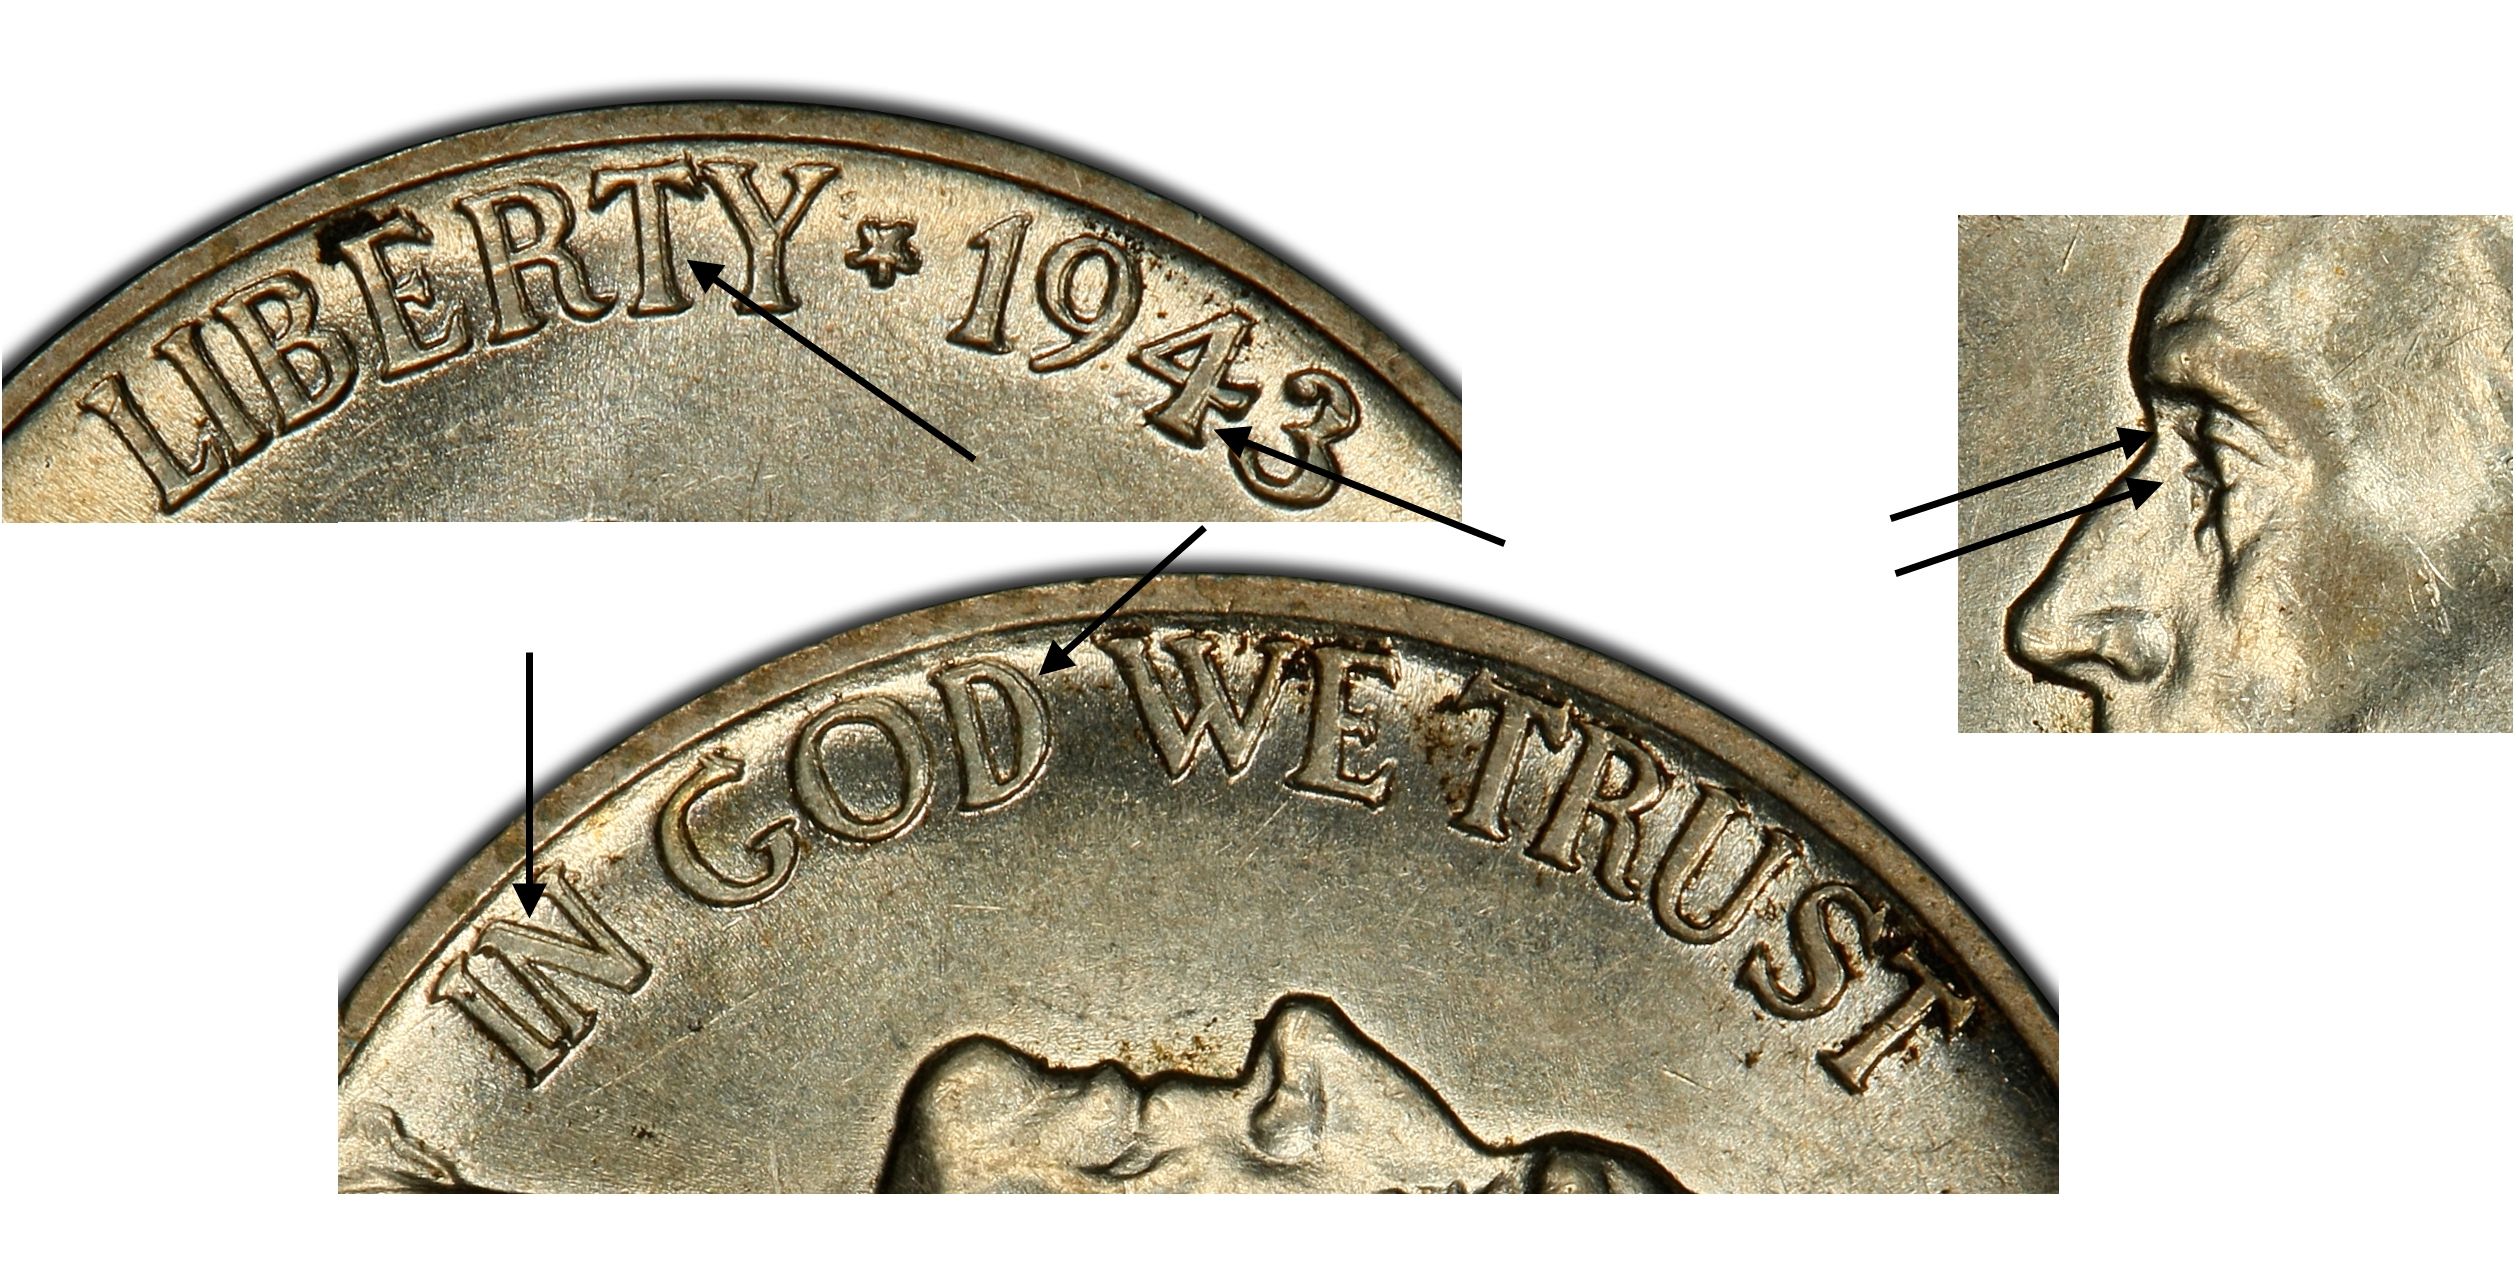 Is a 1943 P nickel rare?